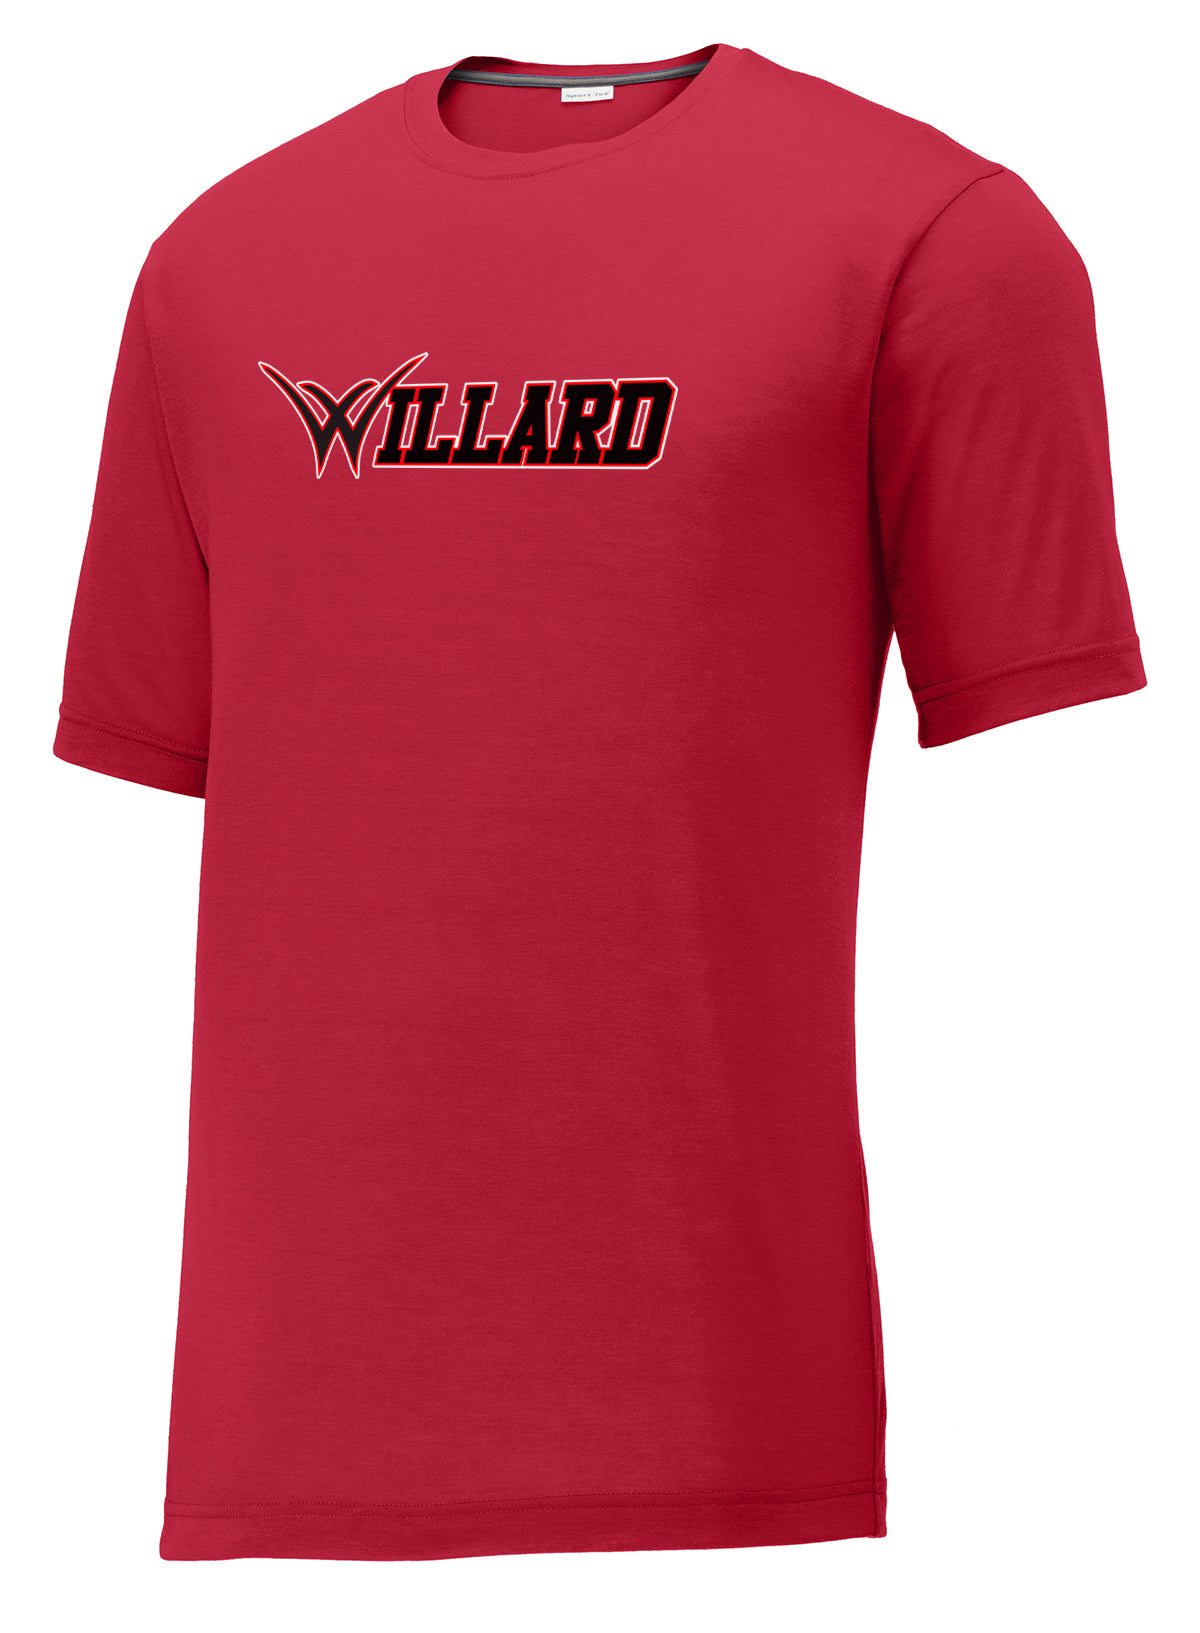 Willard Tigers Baseball CottonTouch Performance T-Shirt